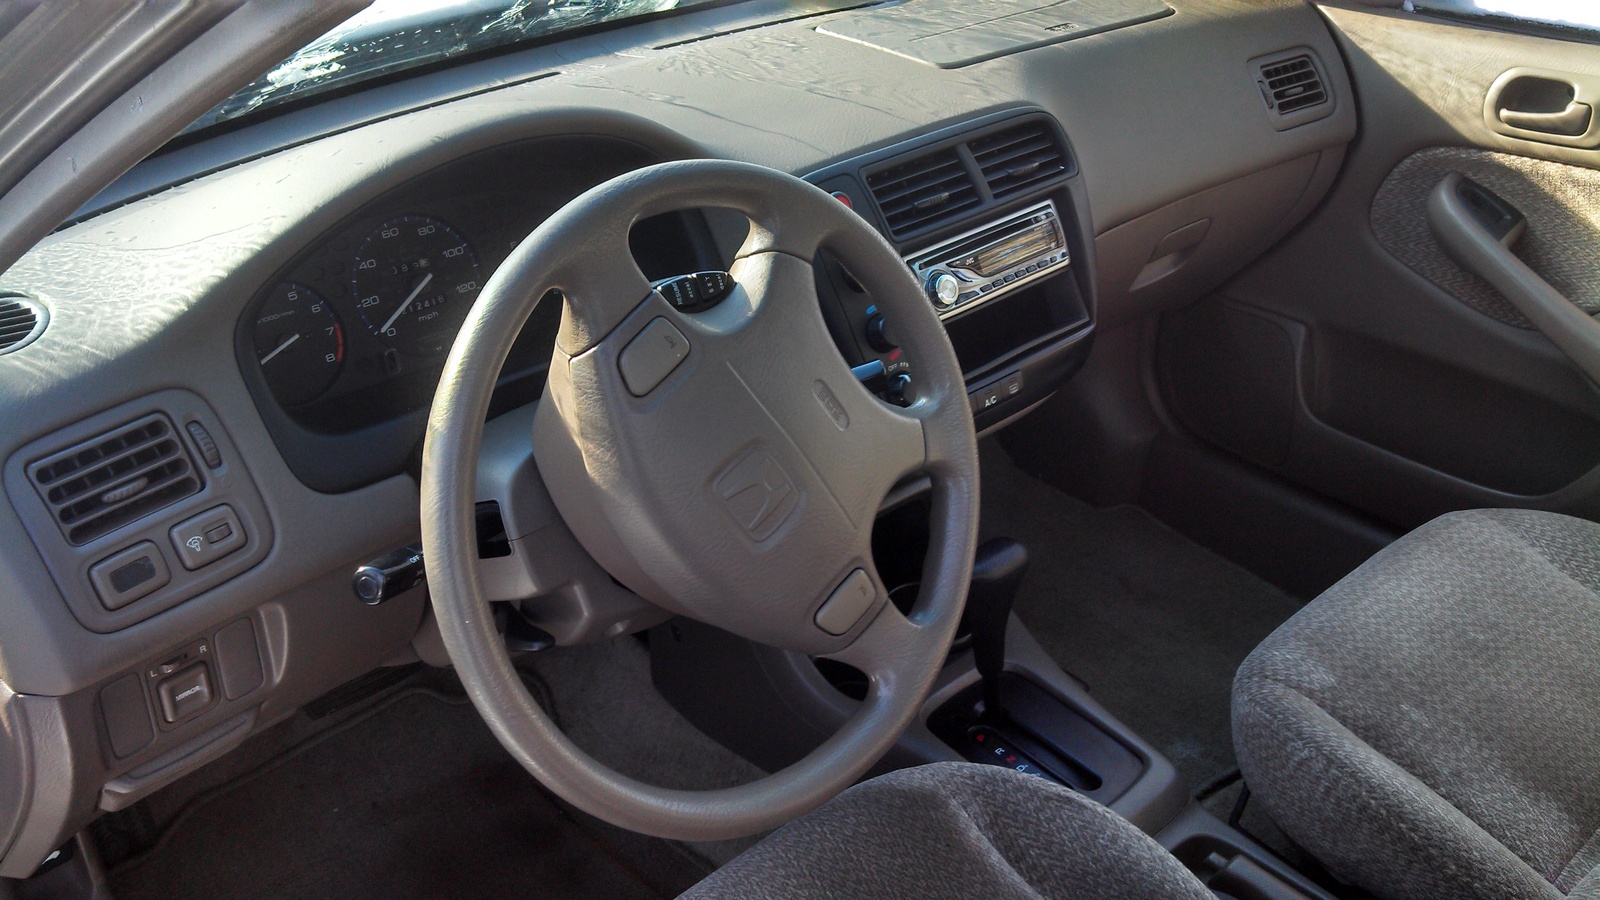 2000 Honda civic lx interior #6